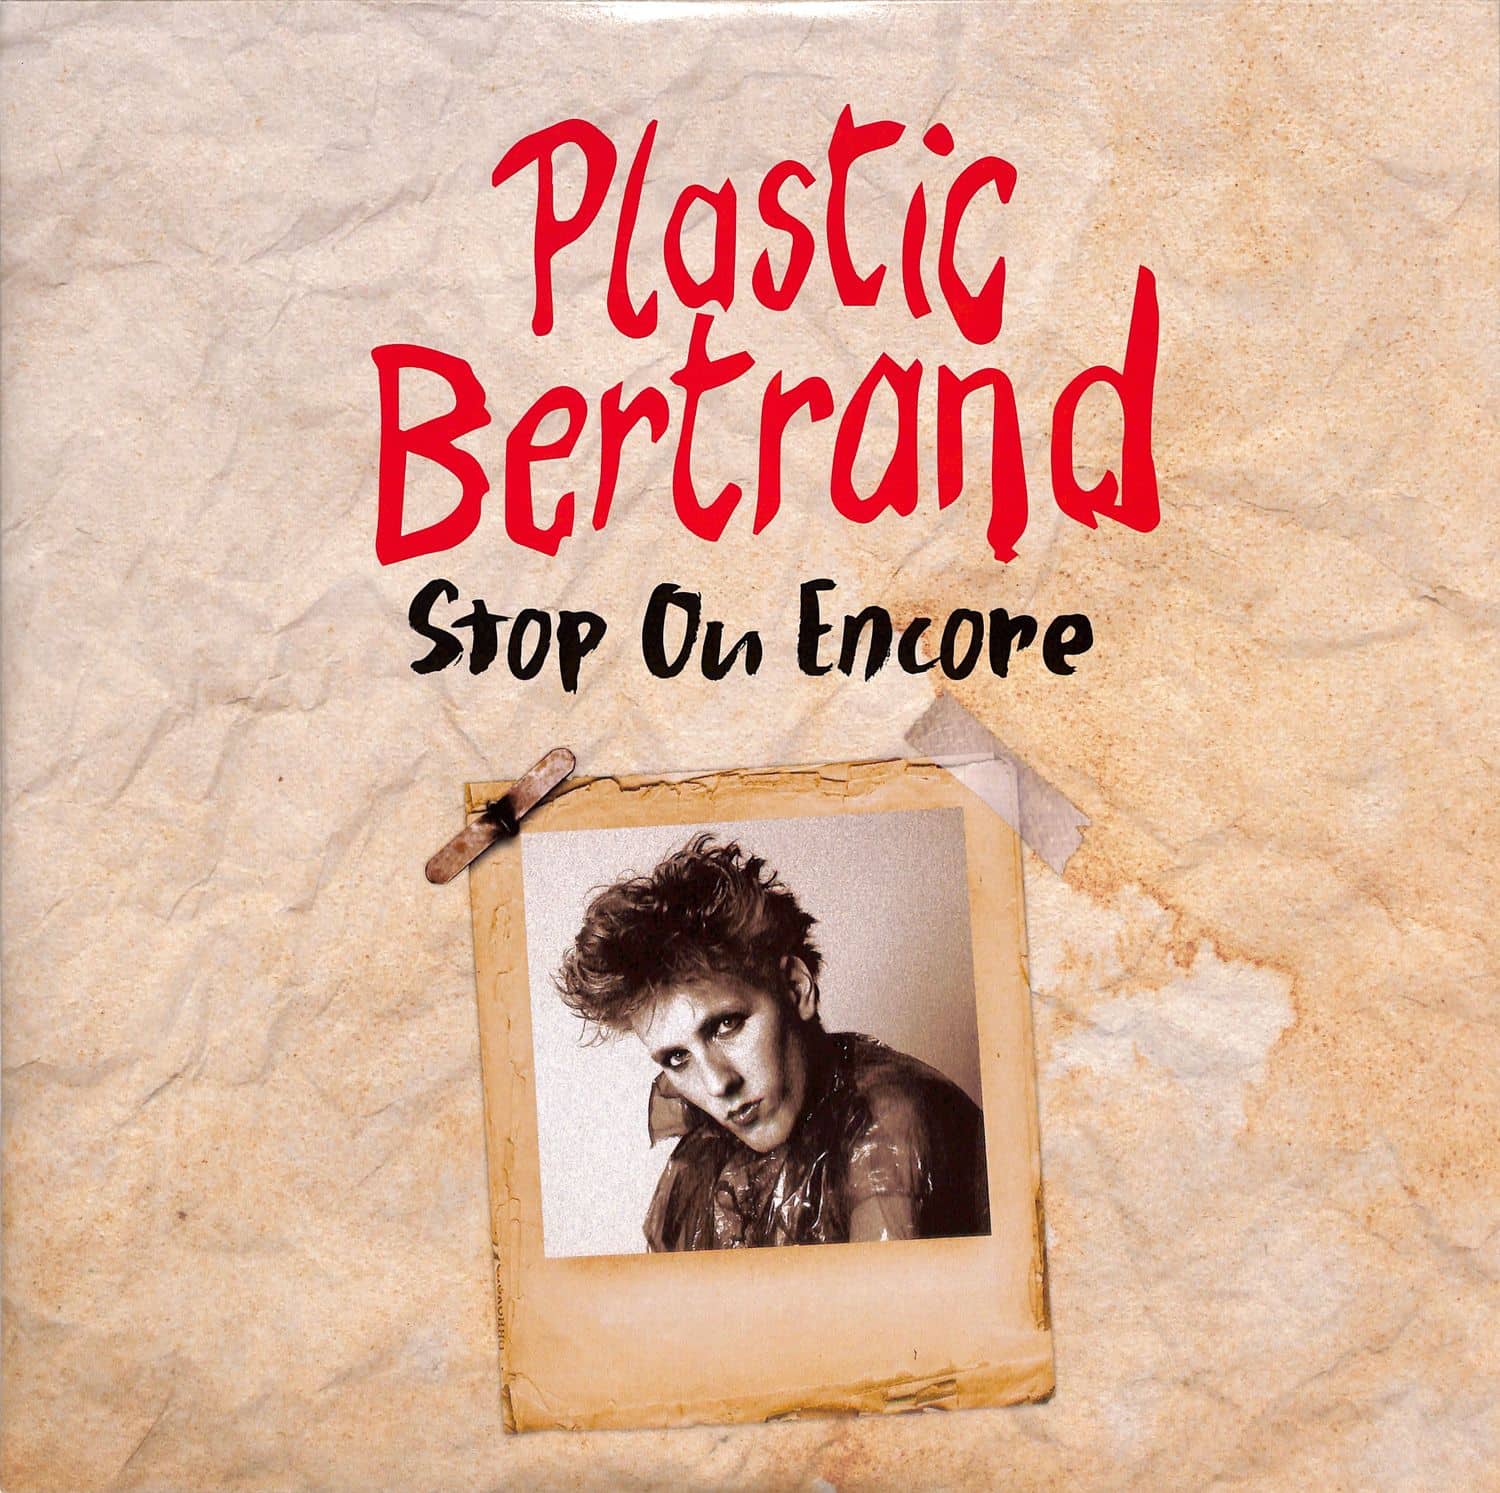 Plastic Bertrand - STOP OU ENCORE